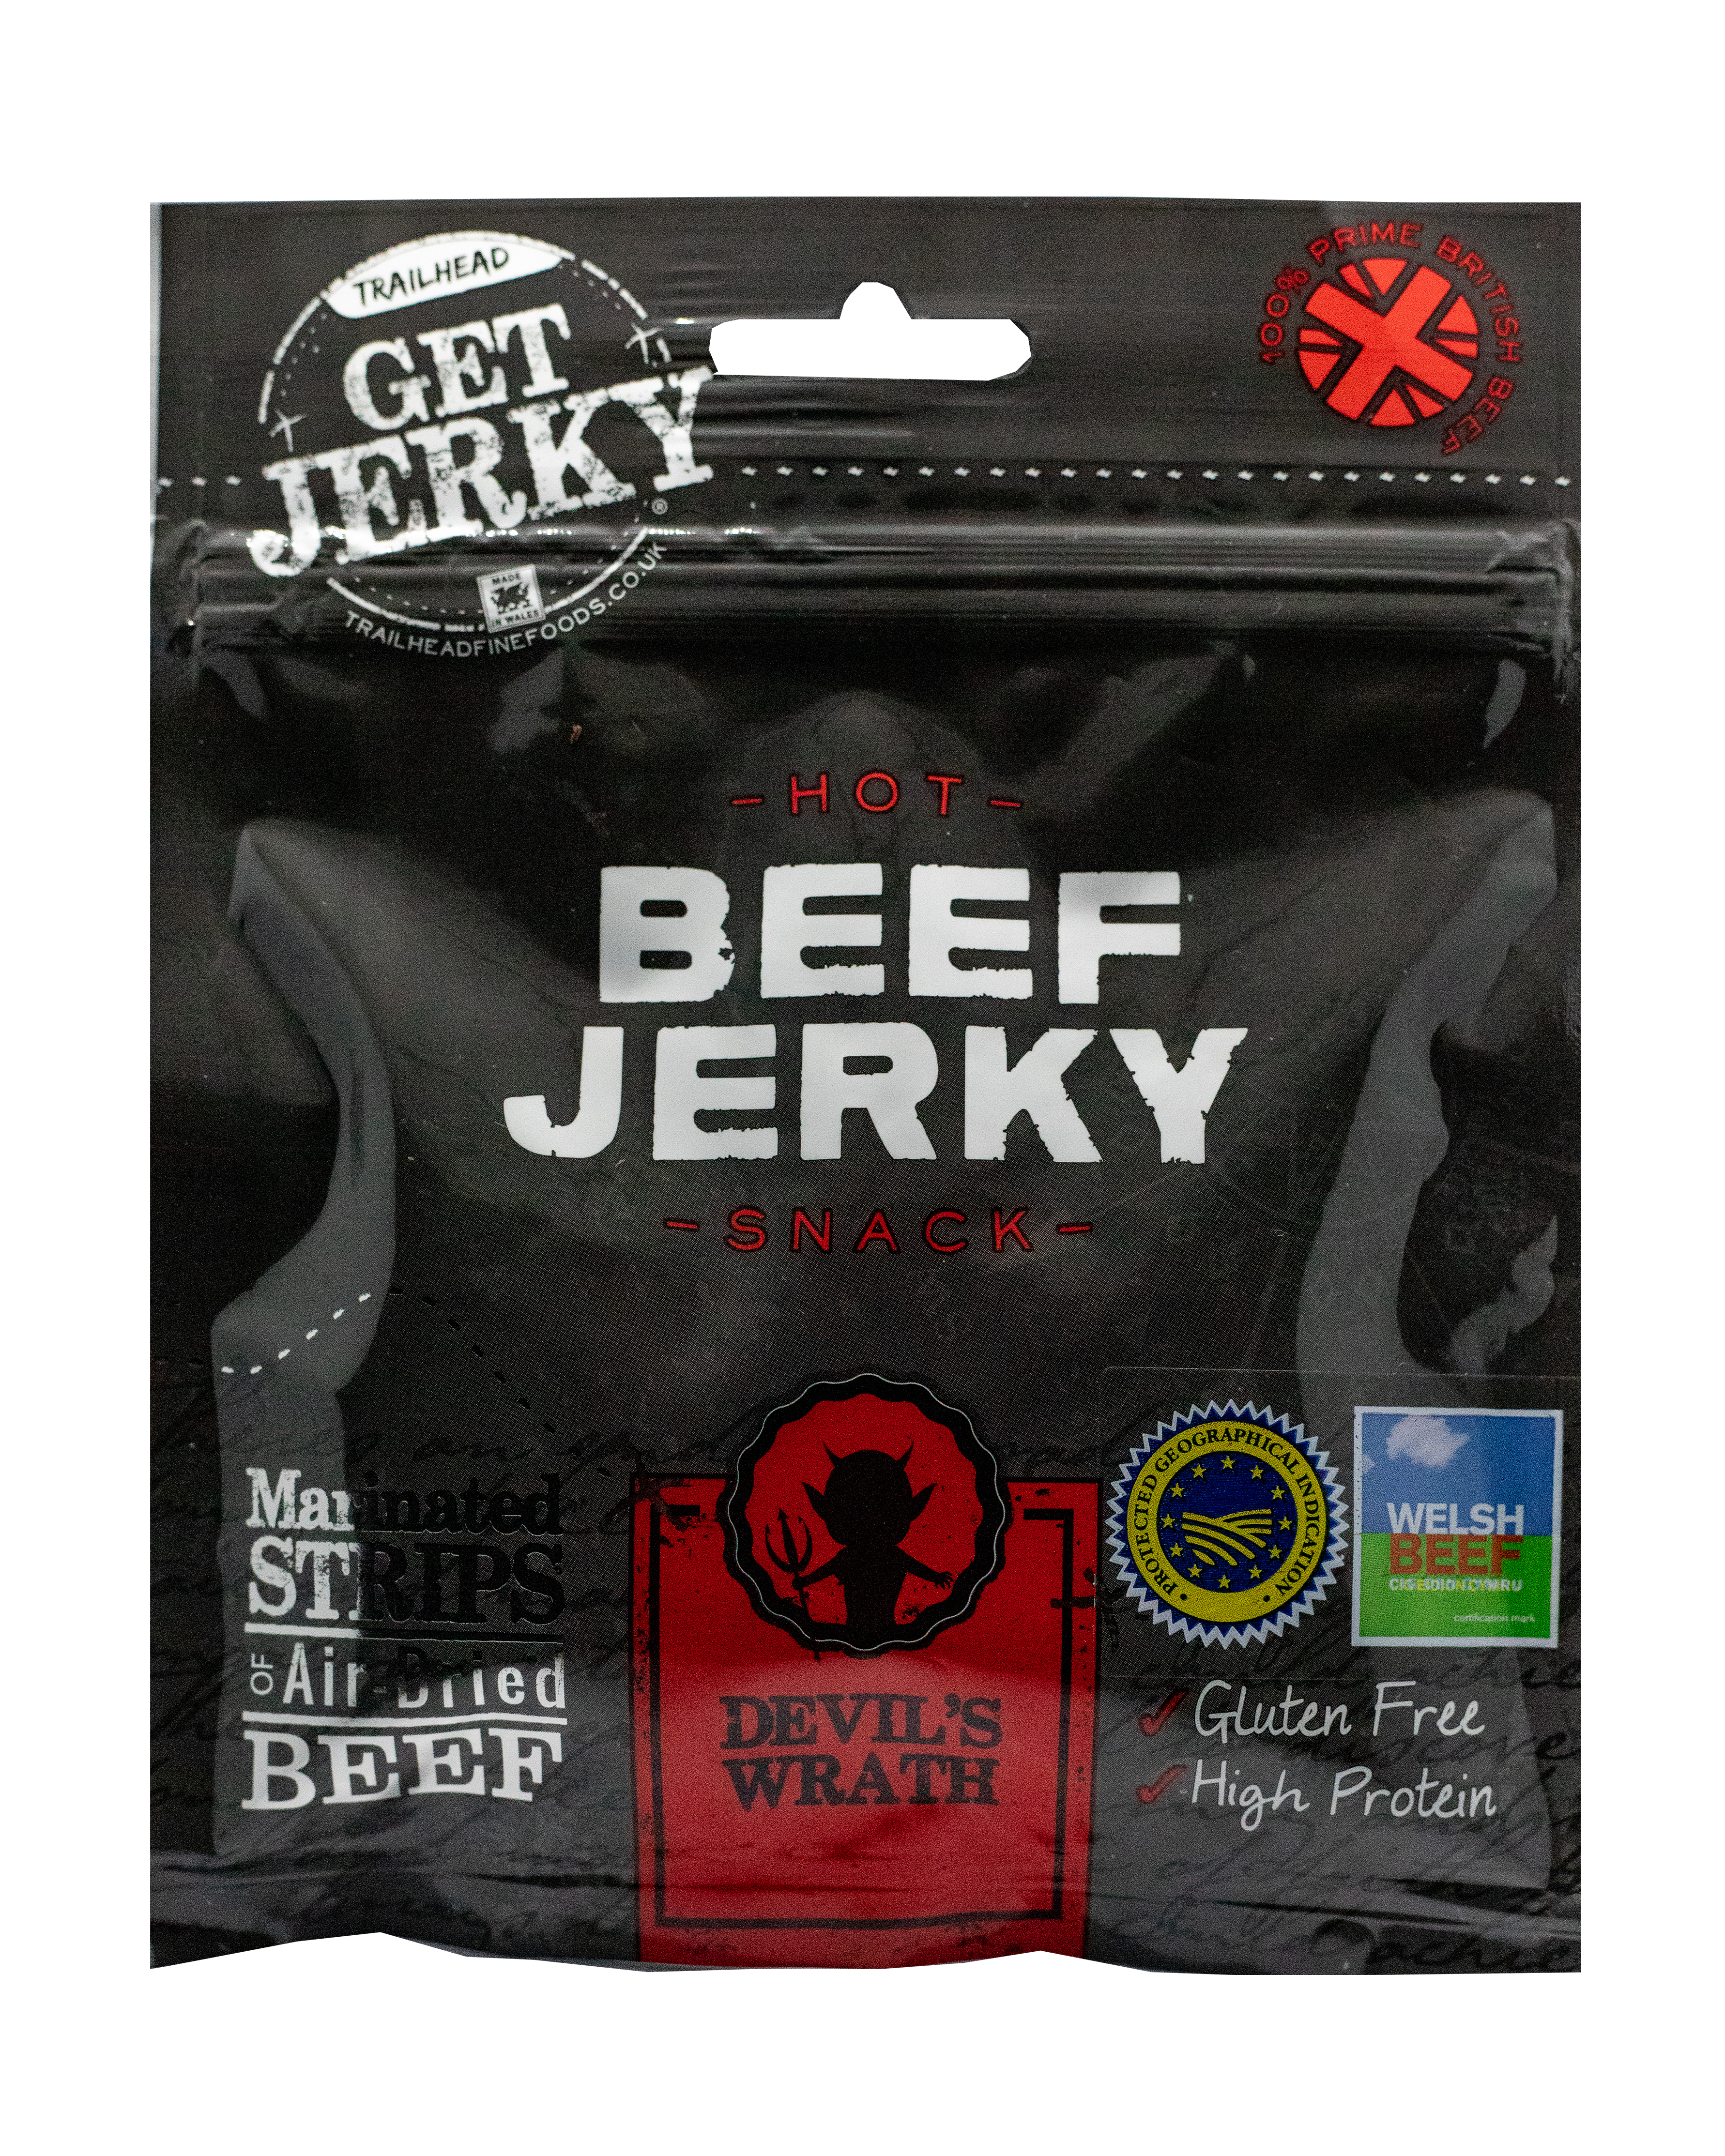 devils wrath spicy beef jerky 